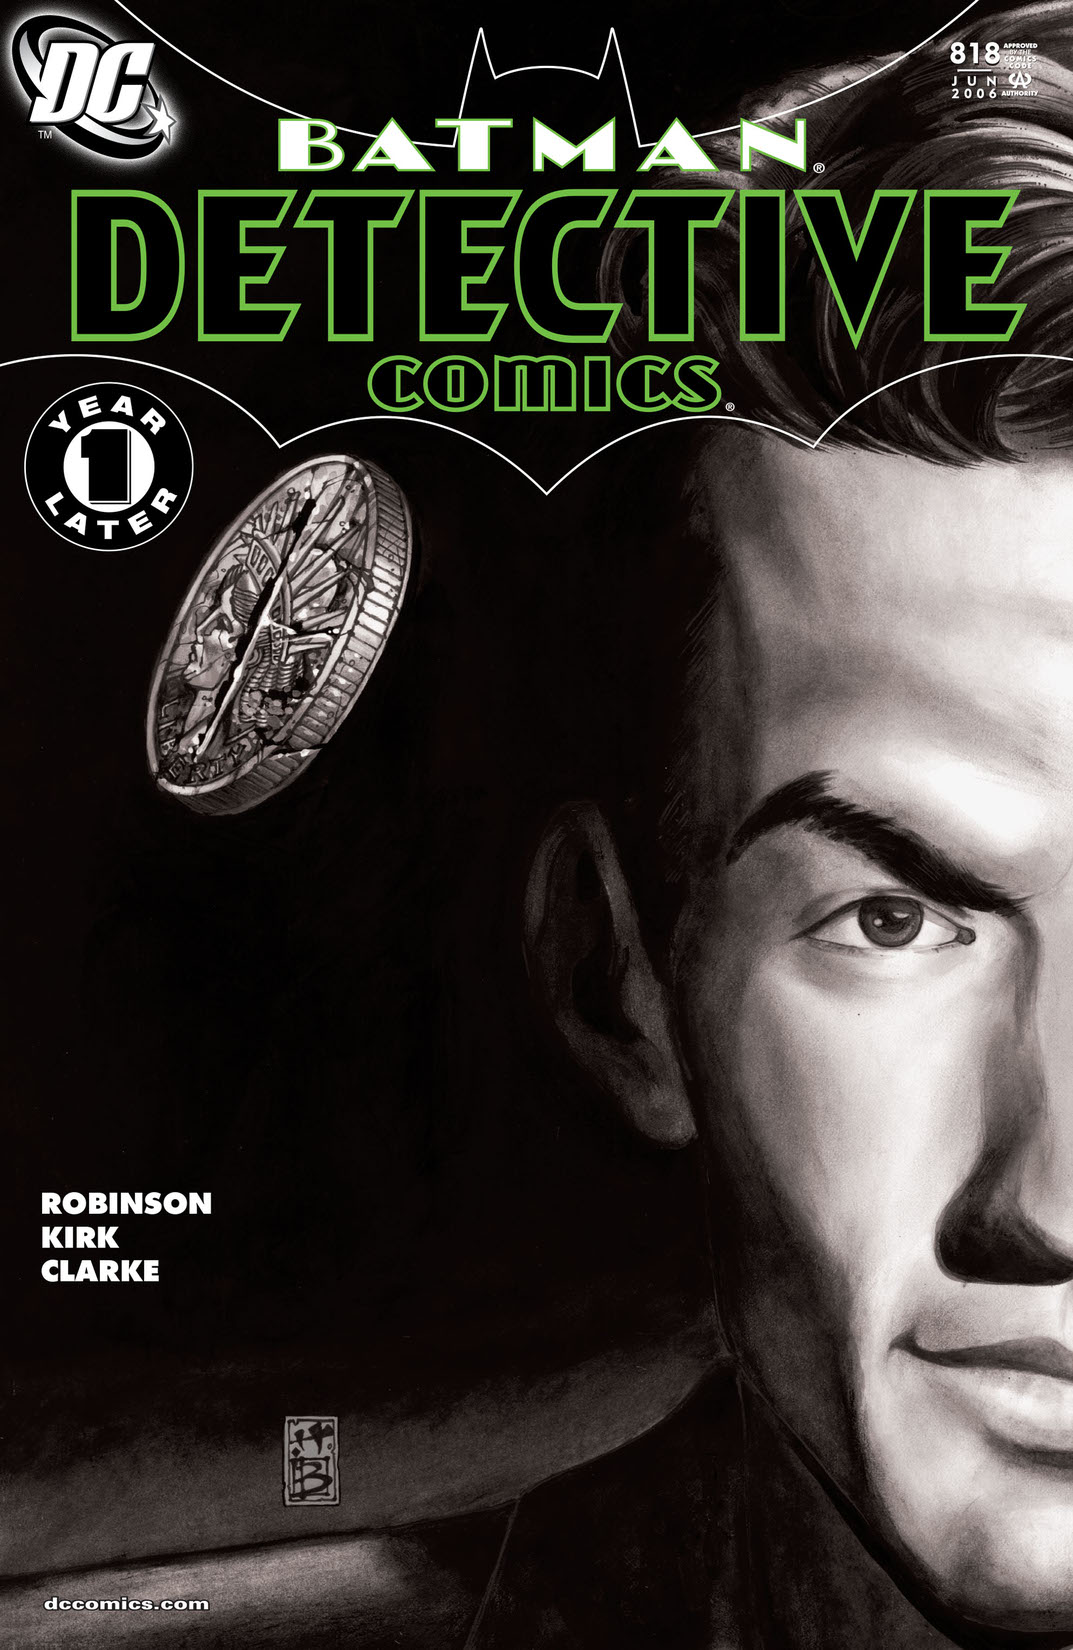 Detective Comics (1937-) #818 preview images